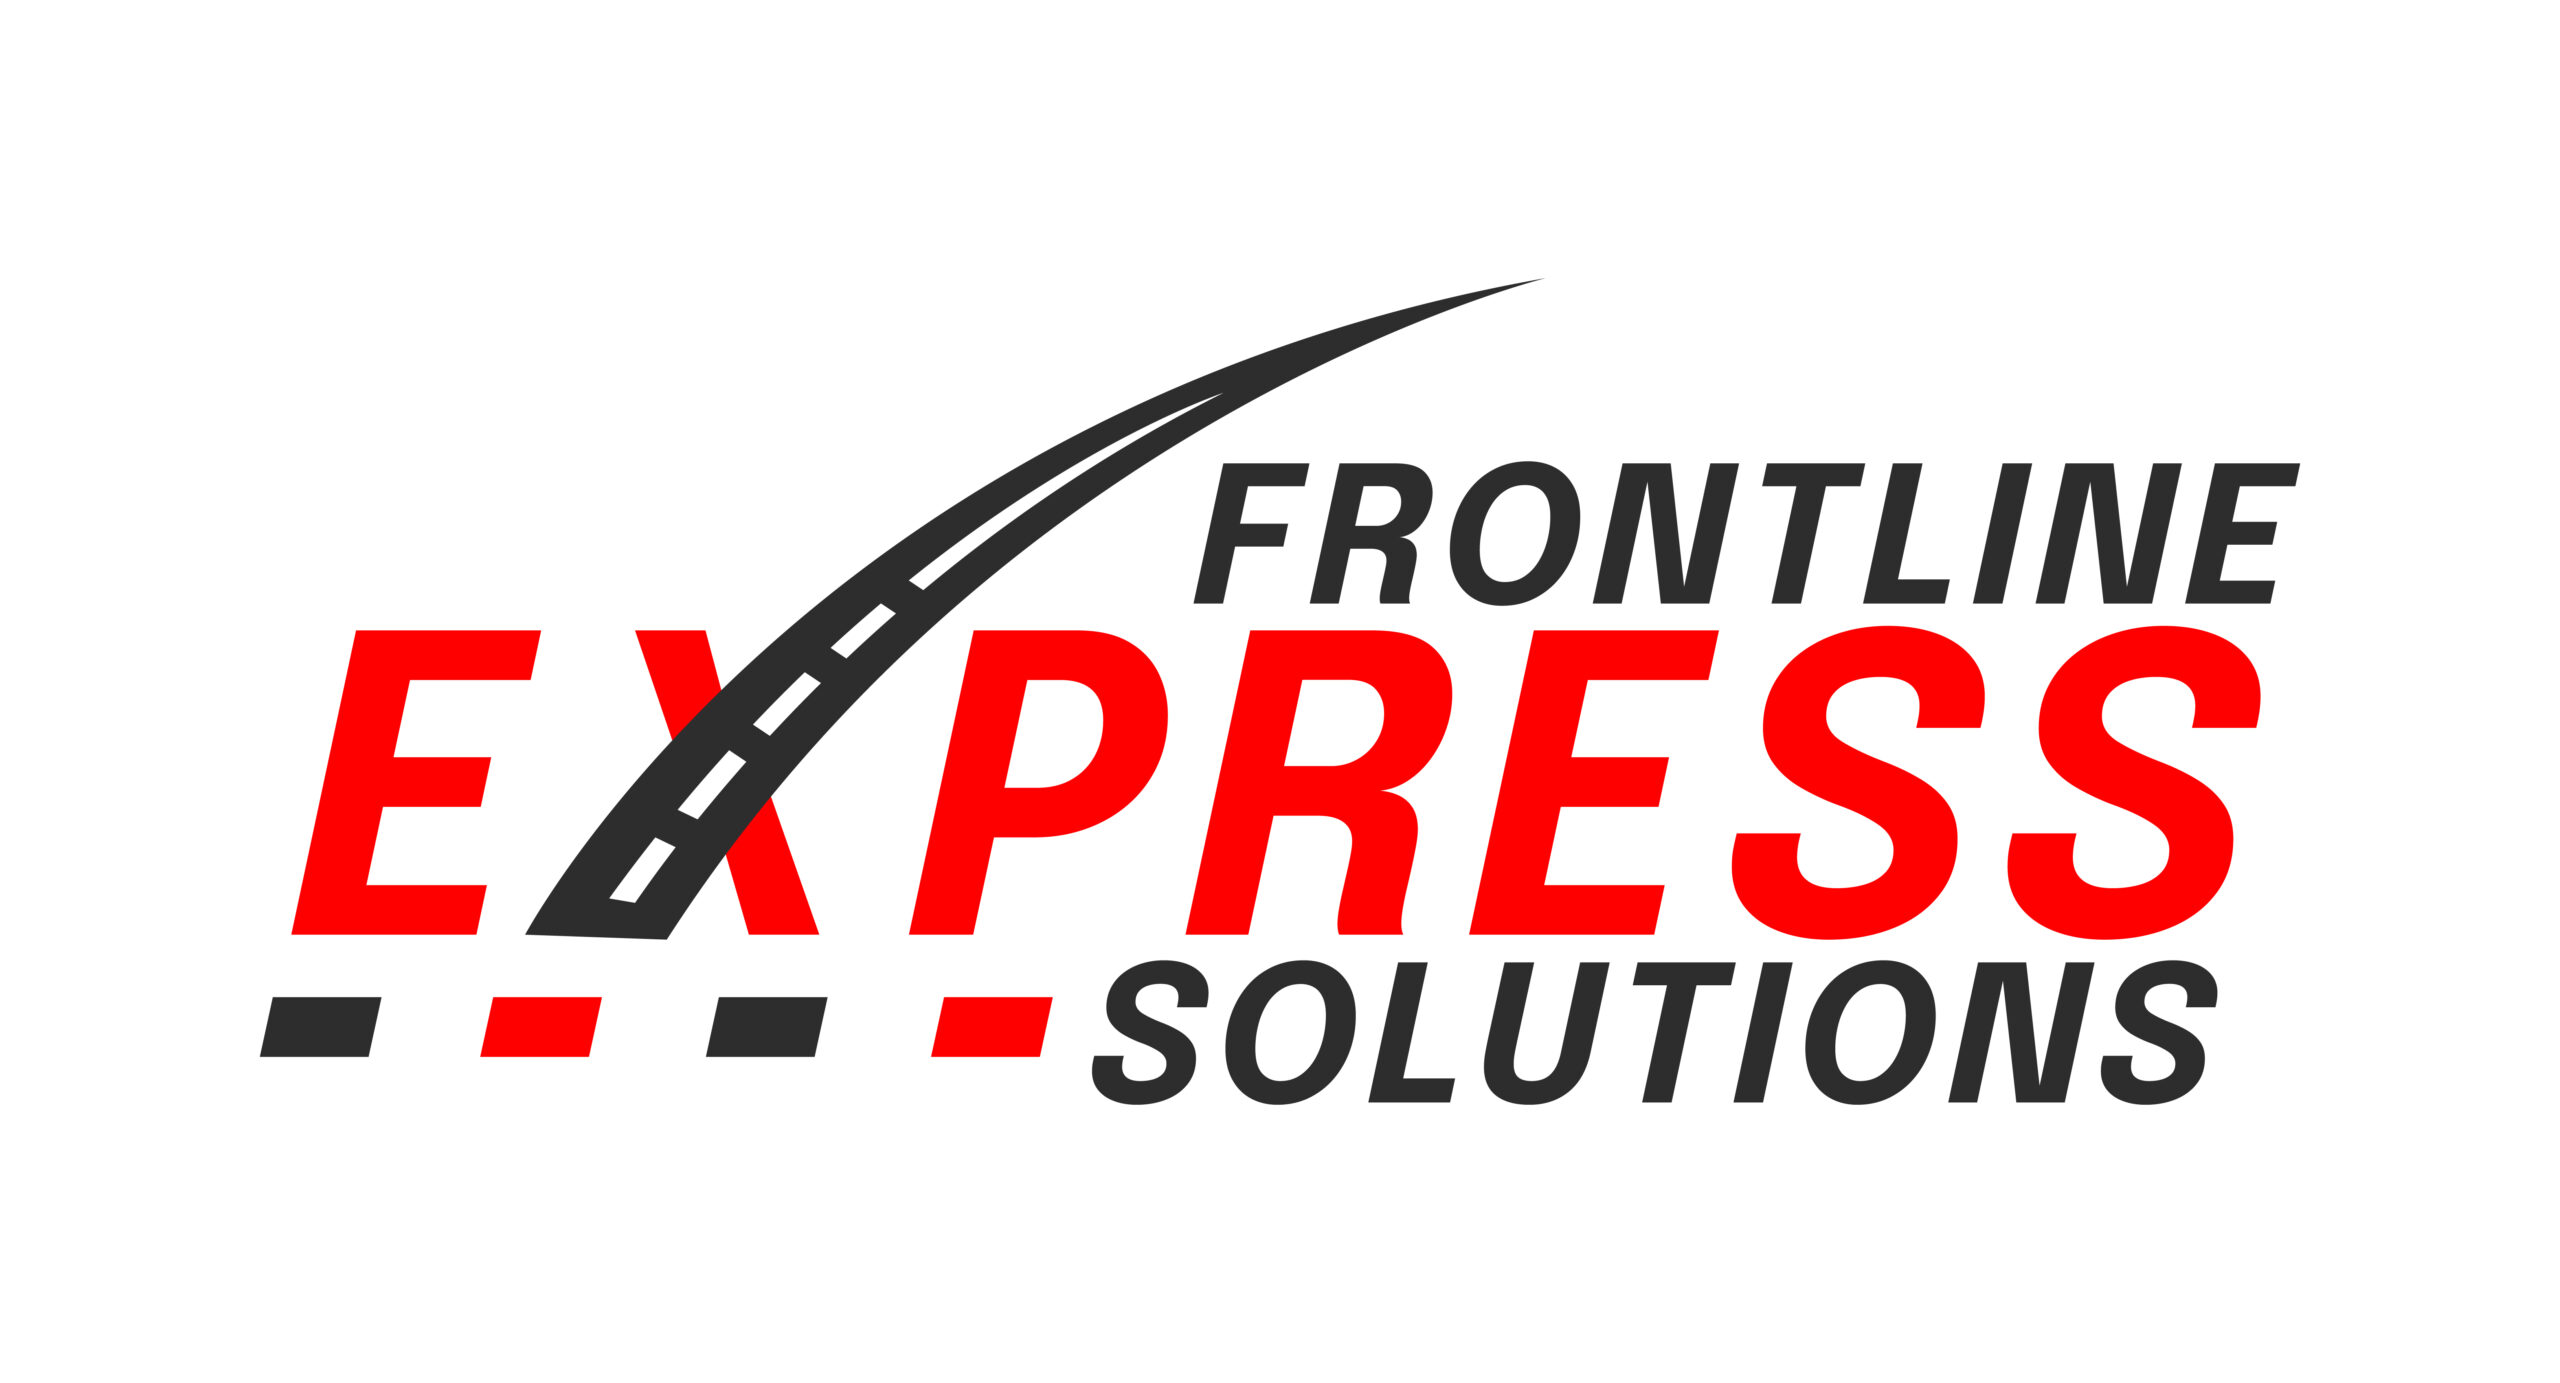 Frontline Express